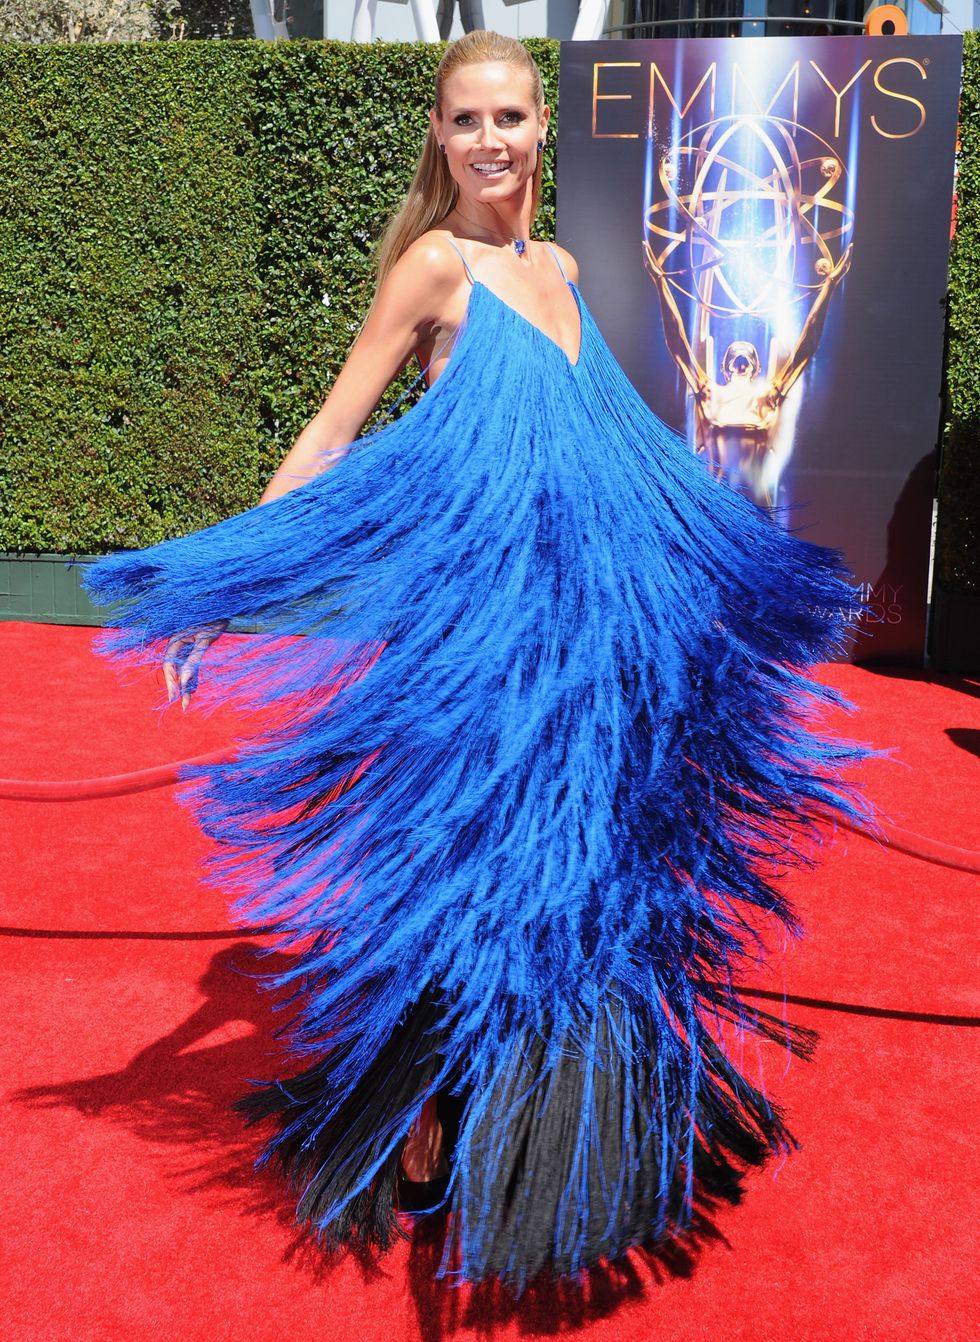 Heidi Klum spinning in blue tassel dress at the Emmys - celebrity style photos - fashion - cosmopolitan.co.uk